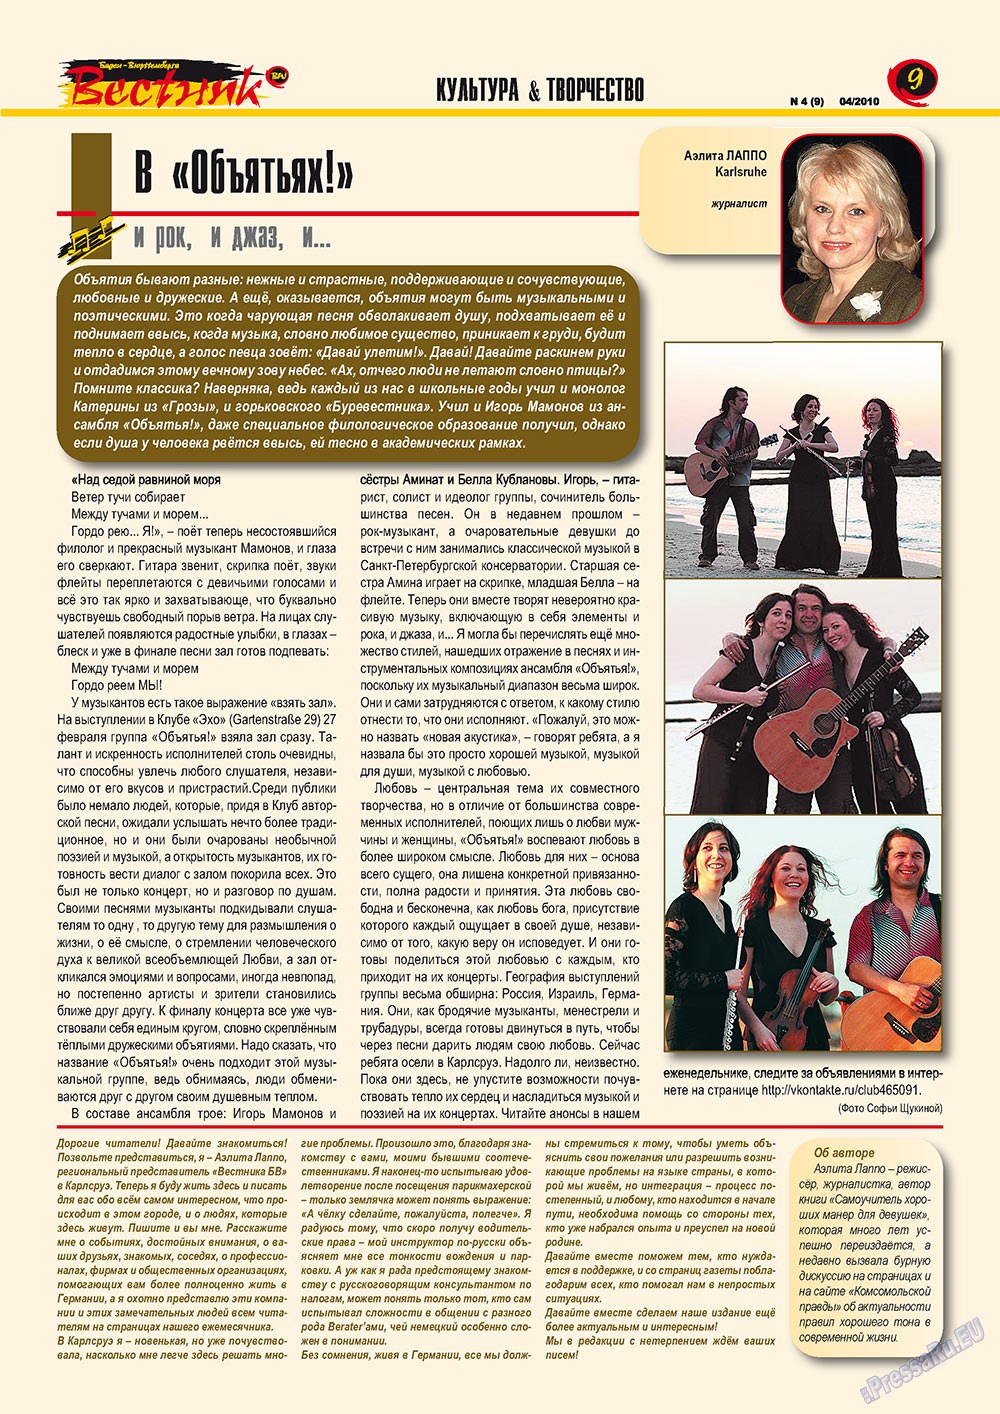 Вестник-info (журнал). 2010 год, номер 4, стр. 9